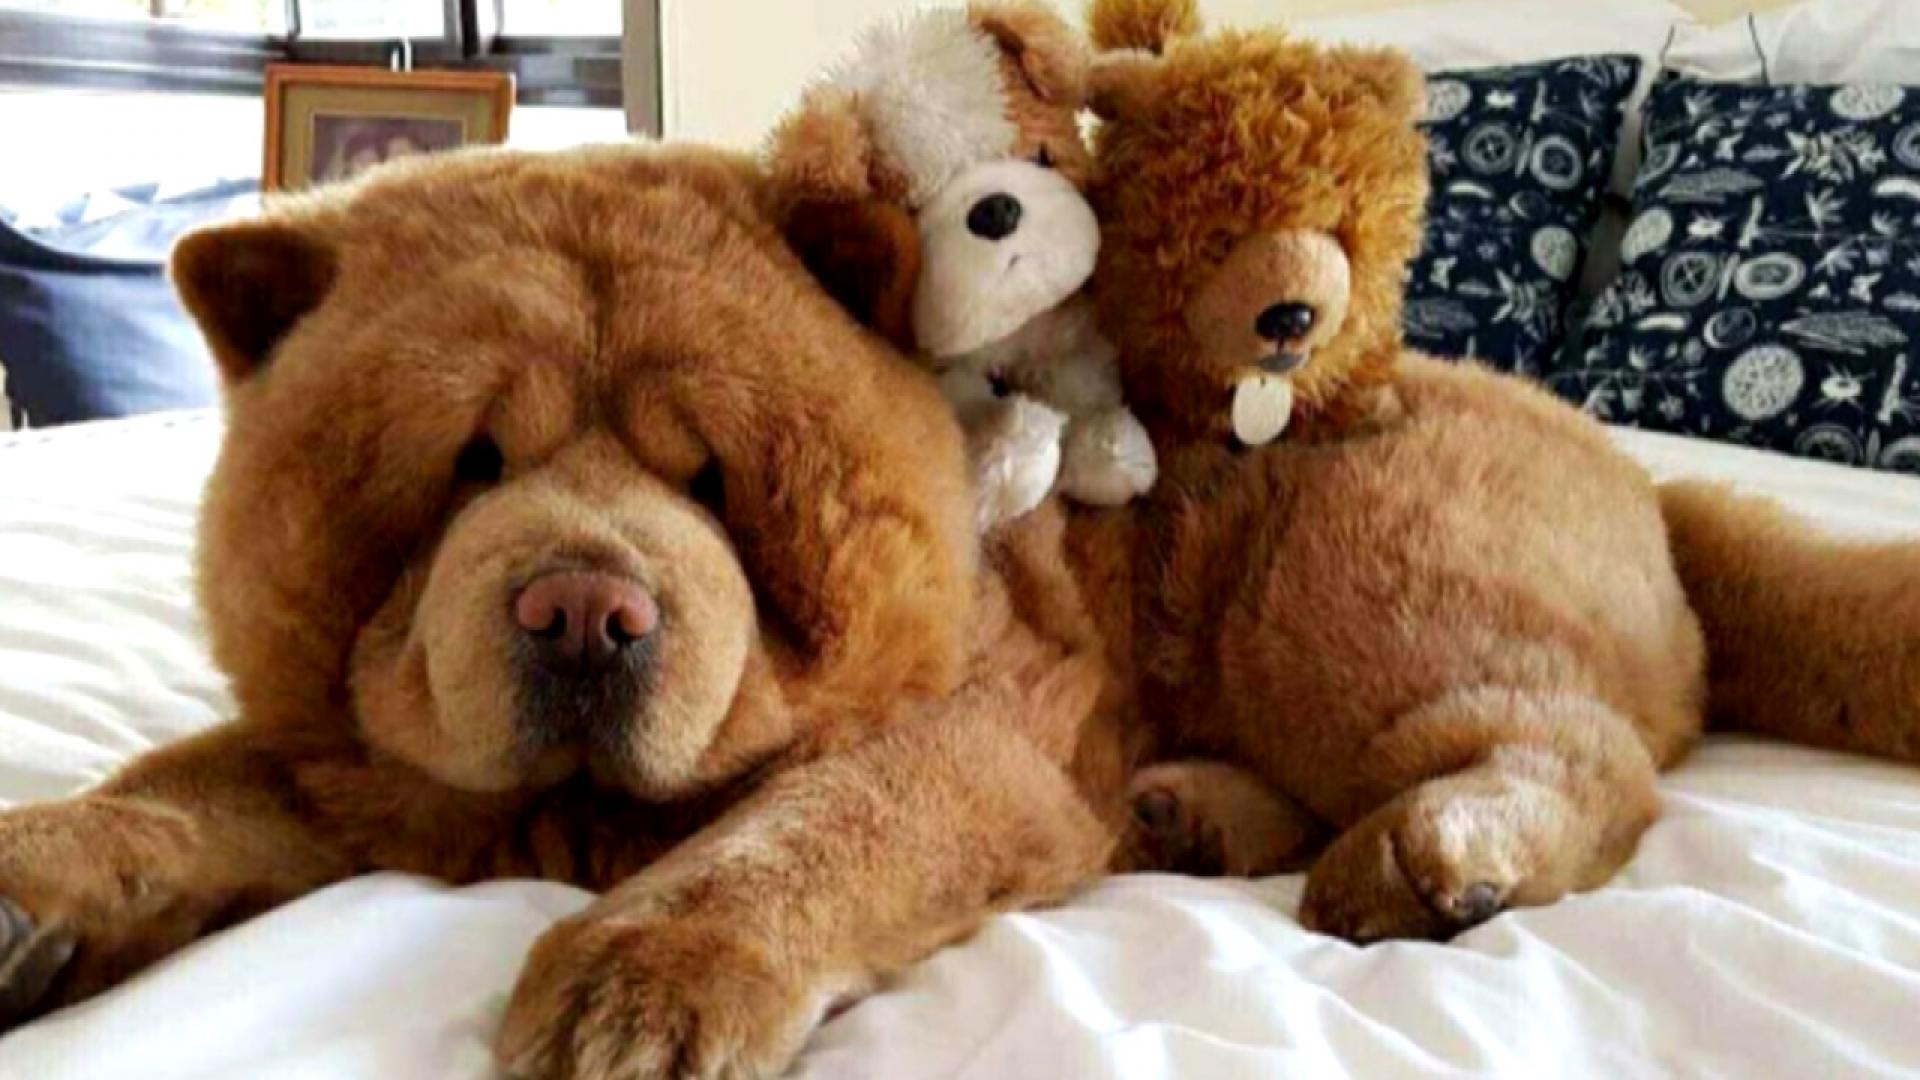 dog inside stuffed bear